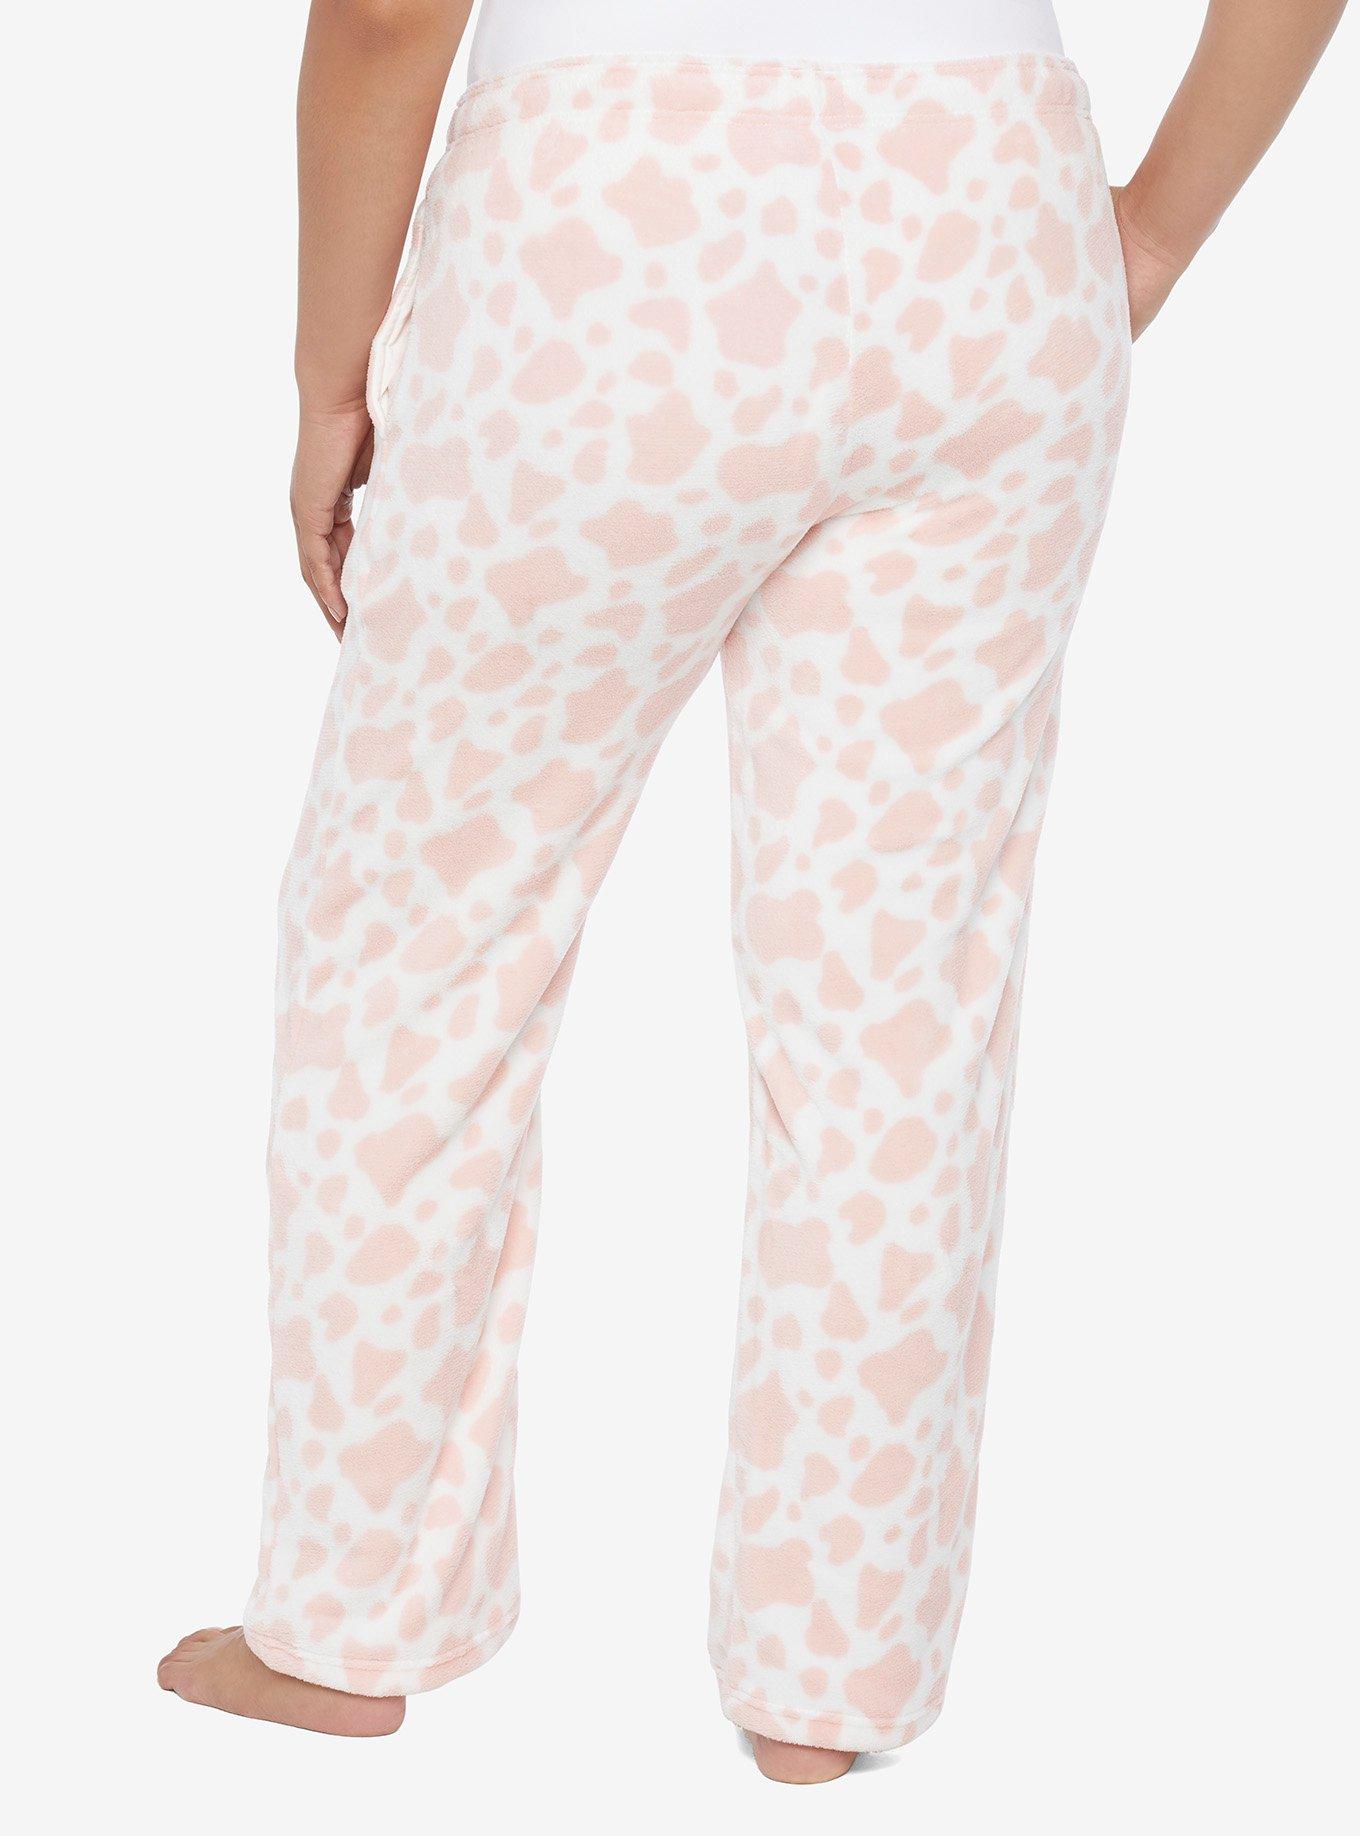 Pink Cow Fuzzy Pajama Pants Plus Size, PINK, alternate